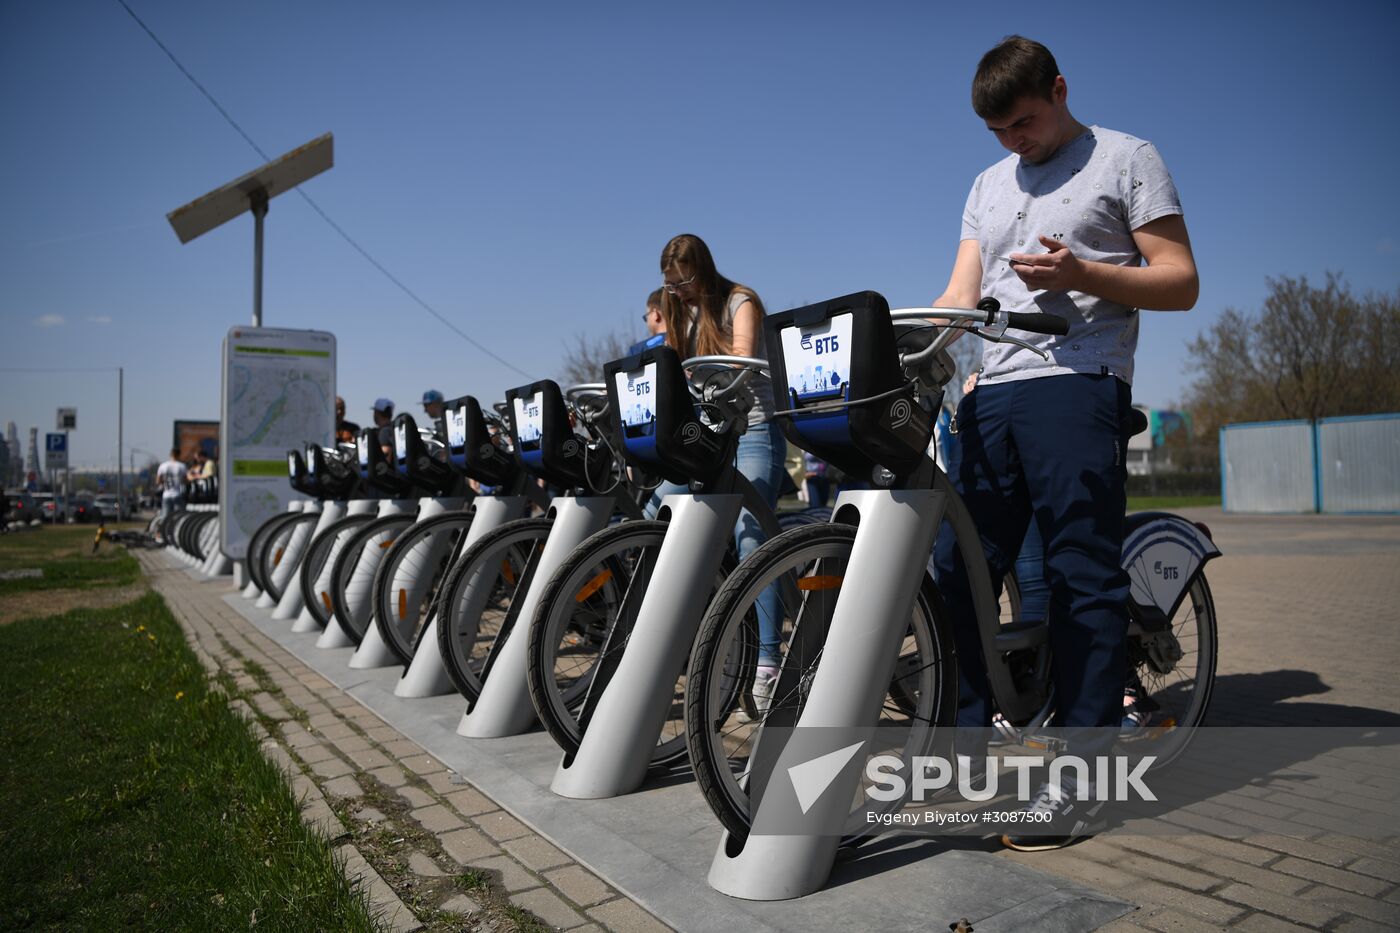 Bike rental stations open in Moscow